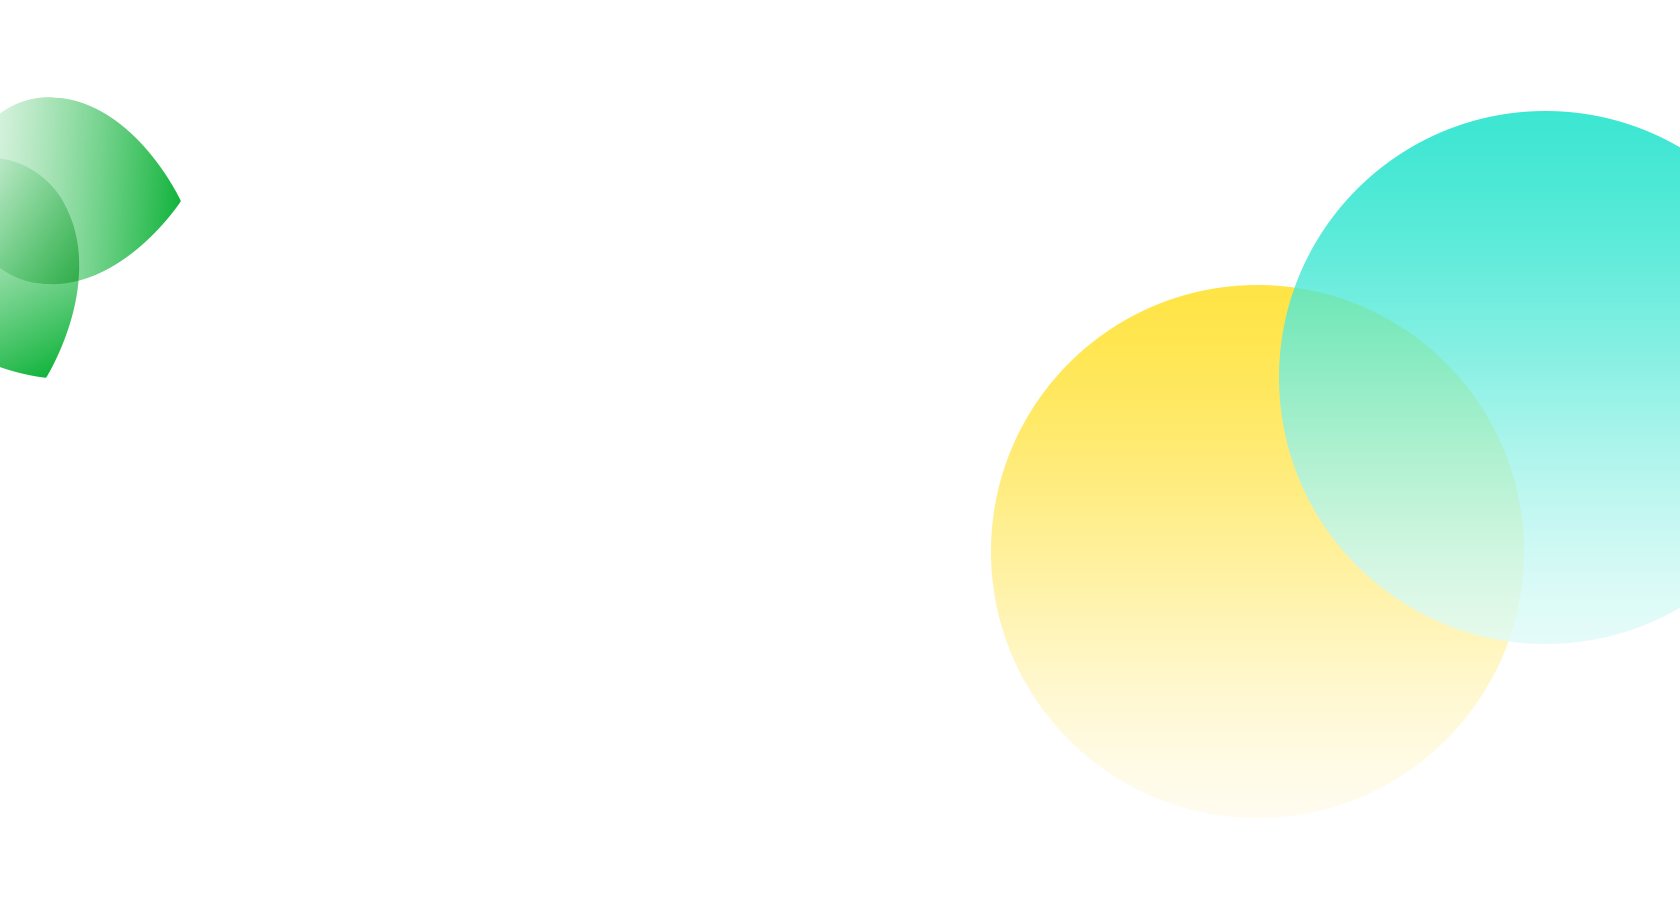 Background illustration of sun